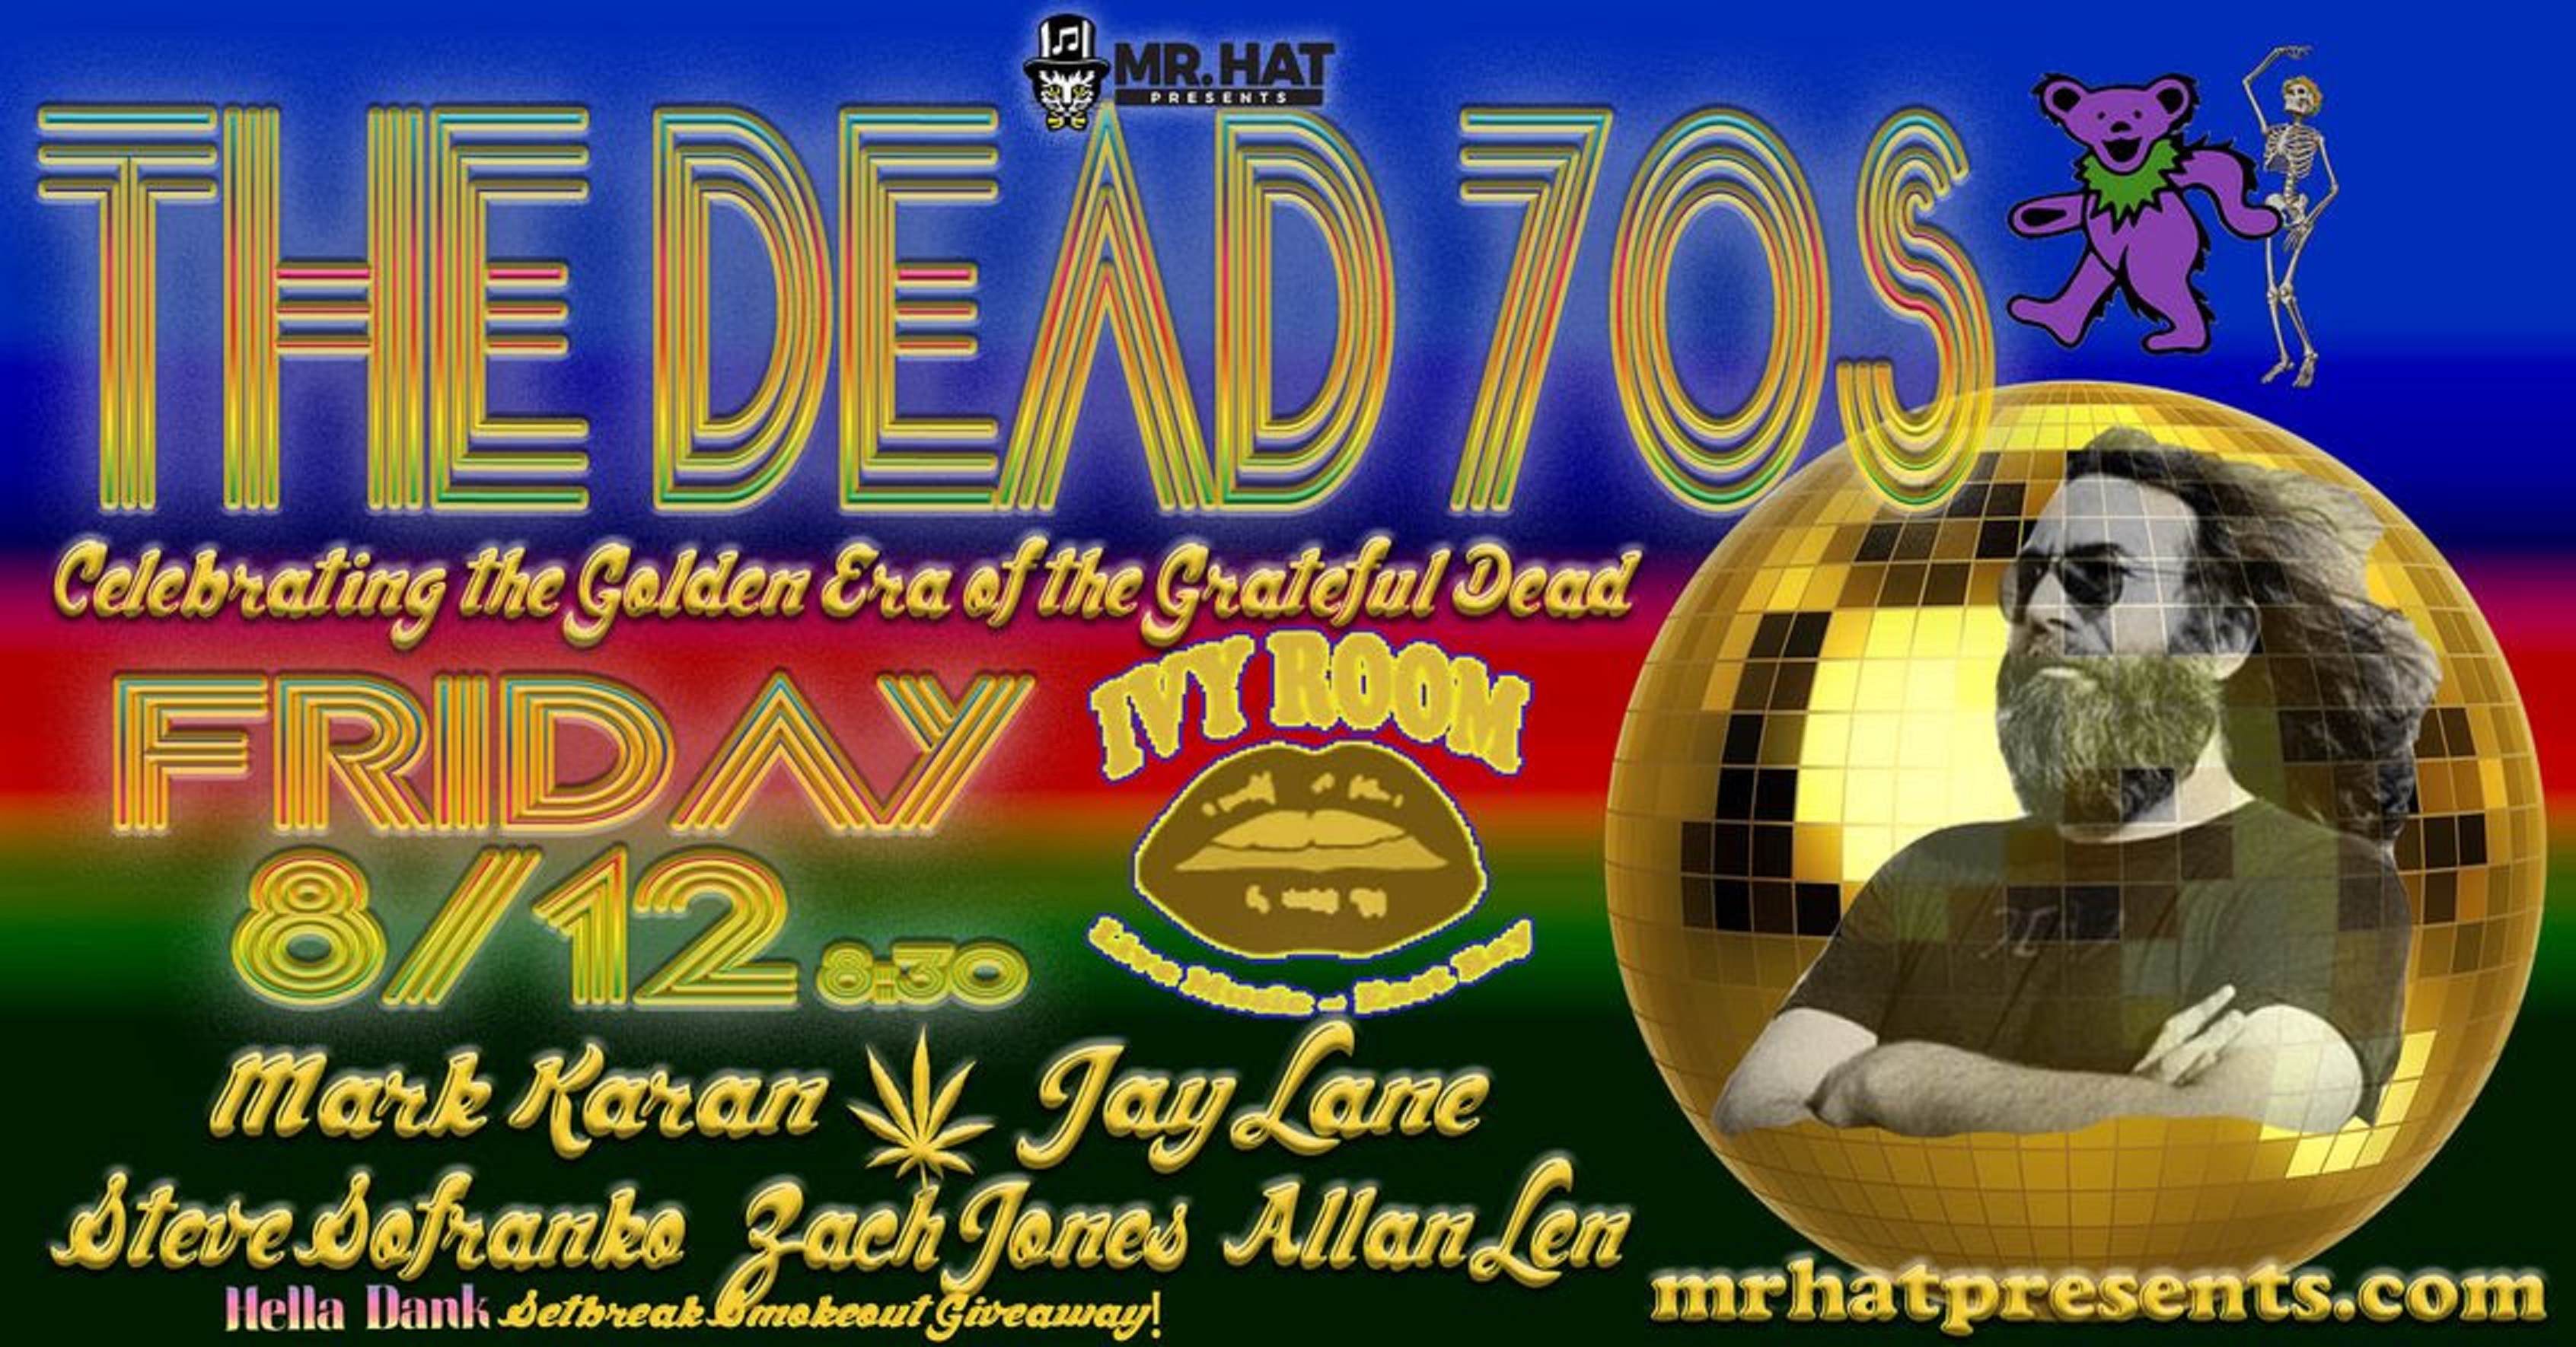 The Dead 70’s featuring Mark Karan & Jay Lane rescheduled for 8/12